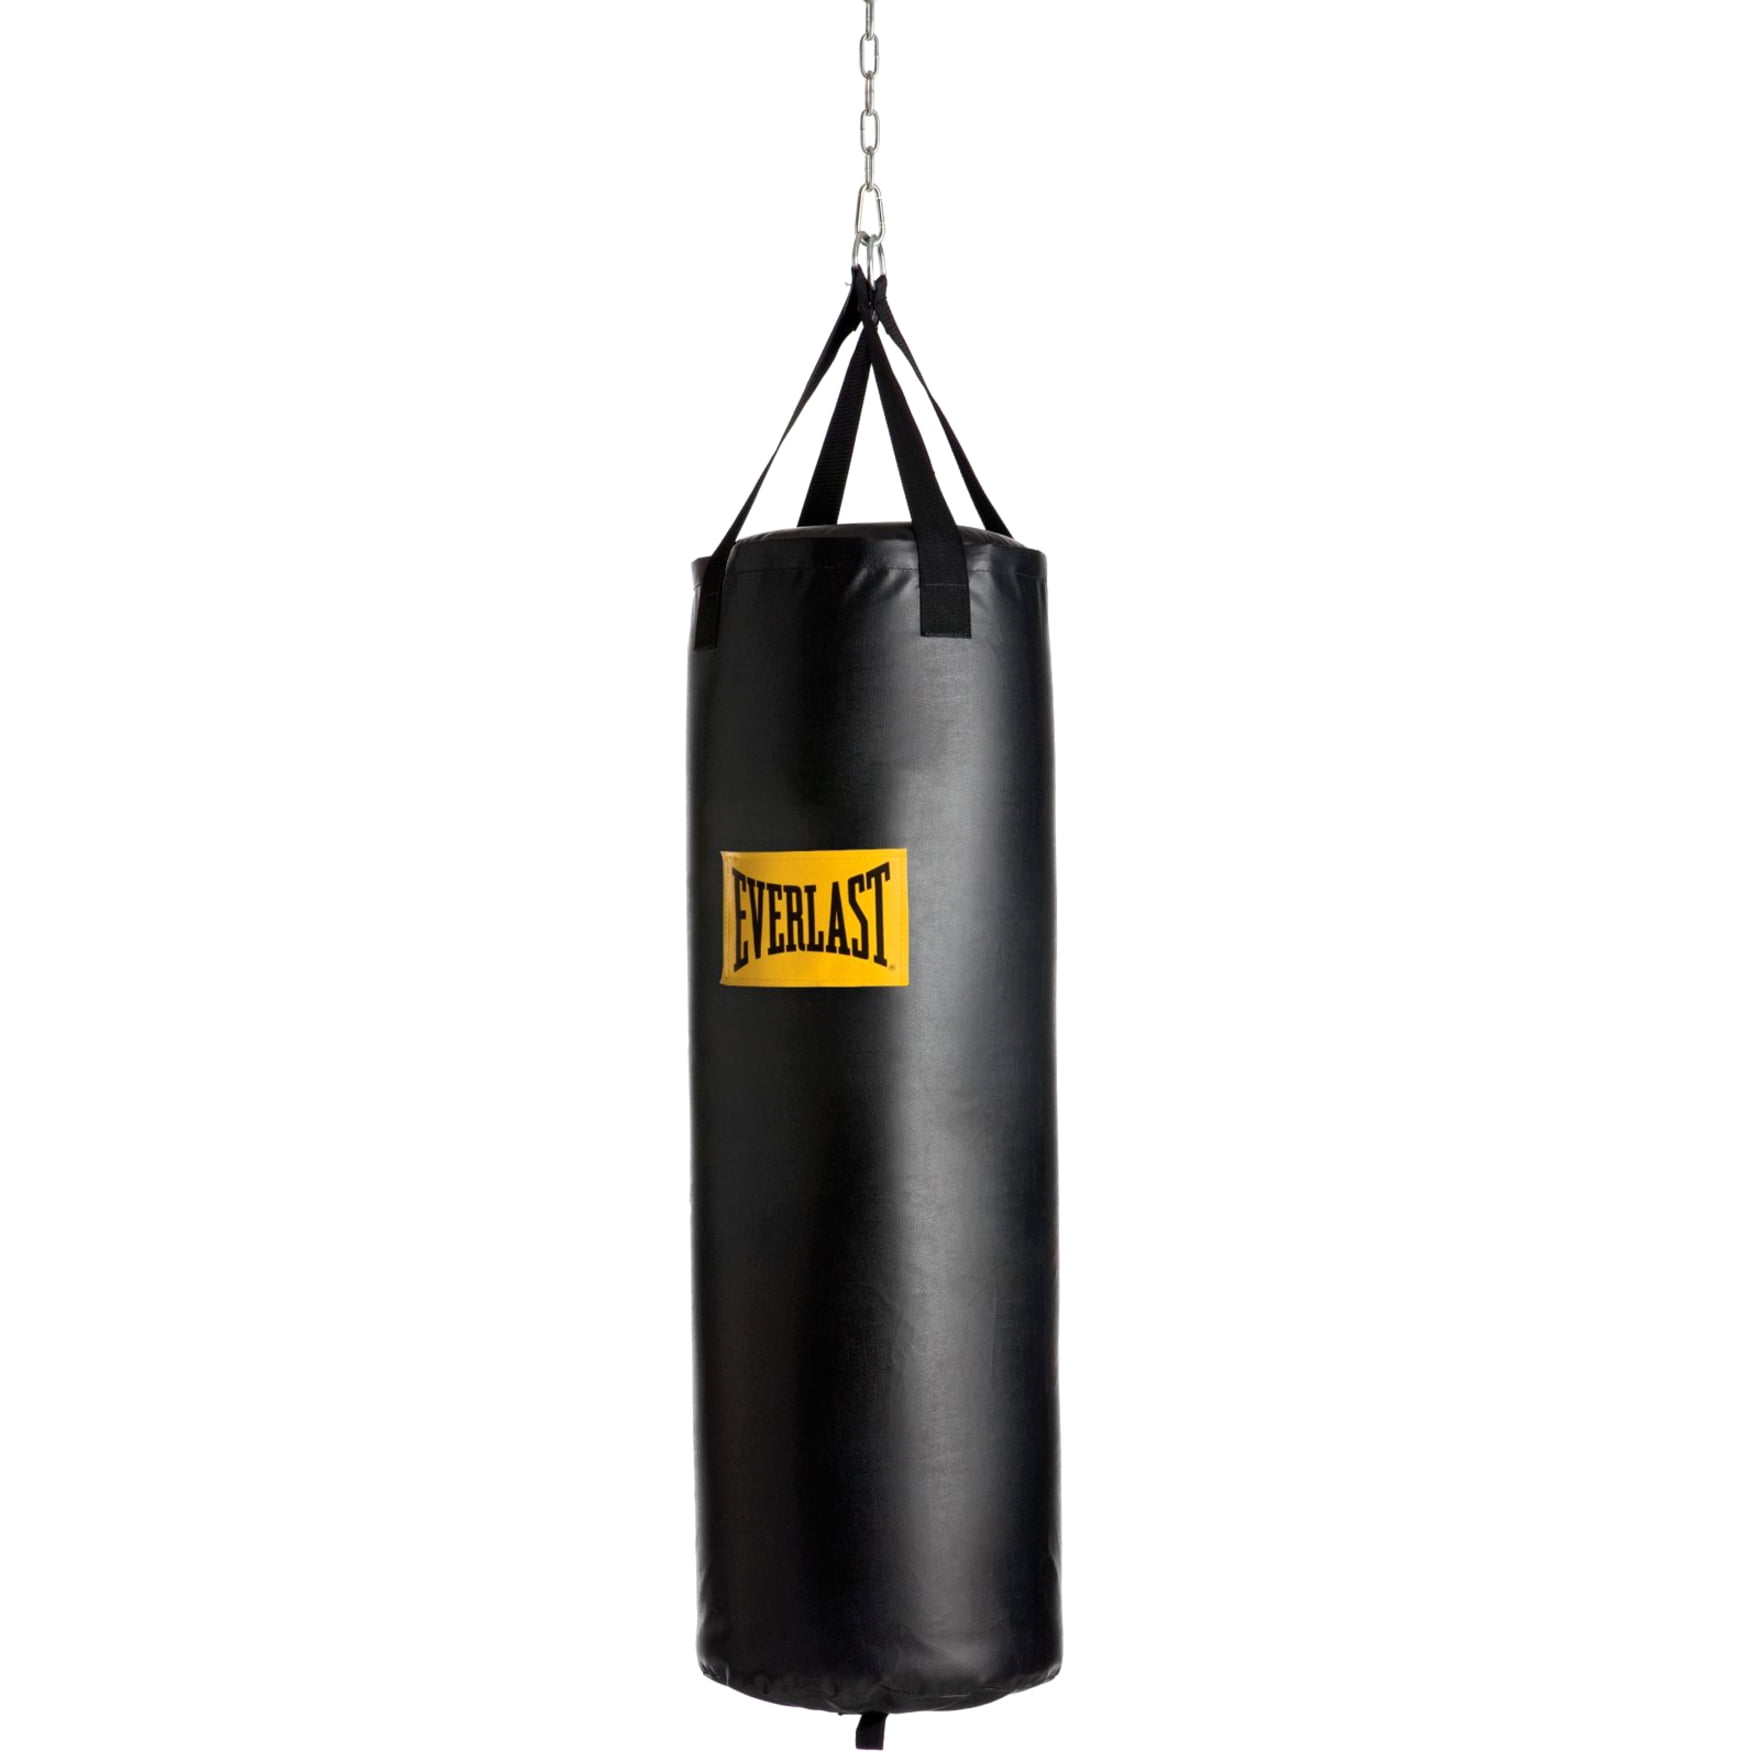 Everlast Nevatear 70lb Filled Heavy Bag Boxing Kickboxing MMA Sale Ships Free!! 